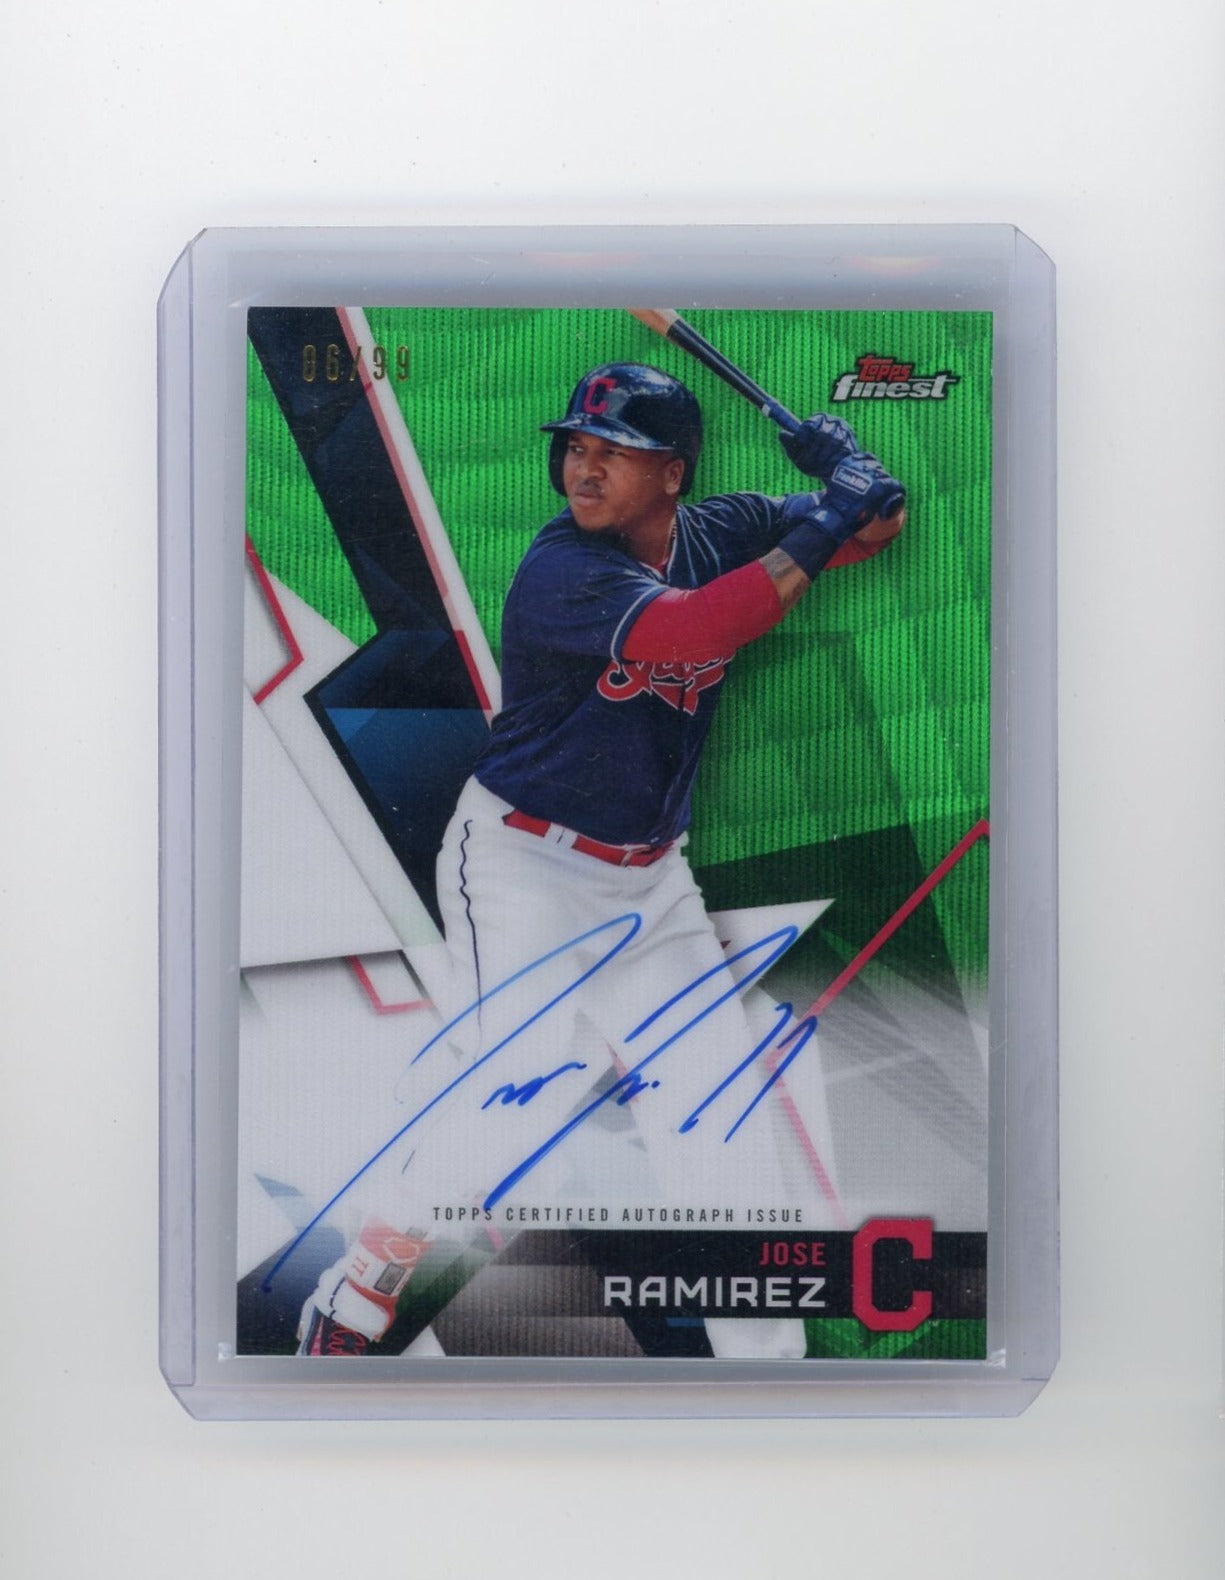 Jose Ramirez 2022 Major League Baseball All-Star Game Autographed